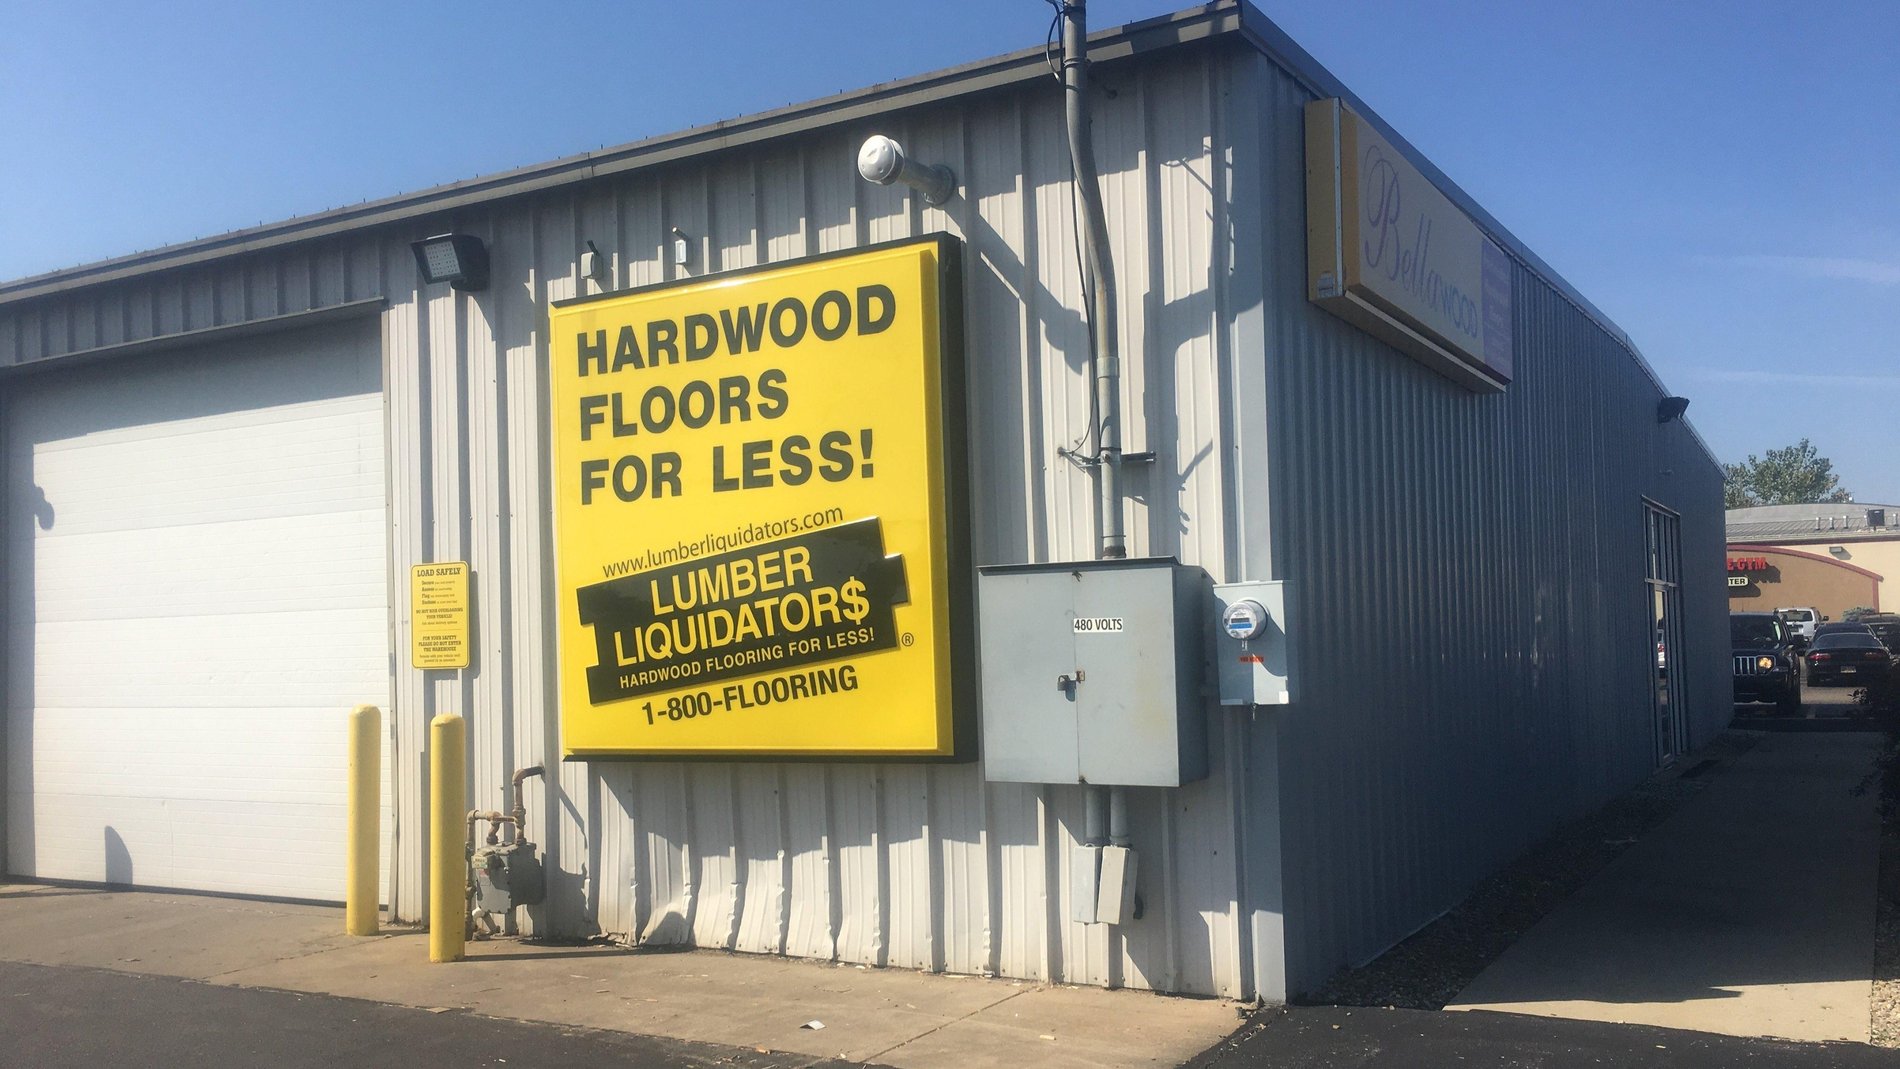 Ll Flooring Lumber Liquidators 1162, Hardwood Flooring Canton Oh